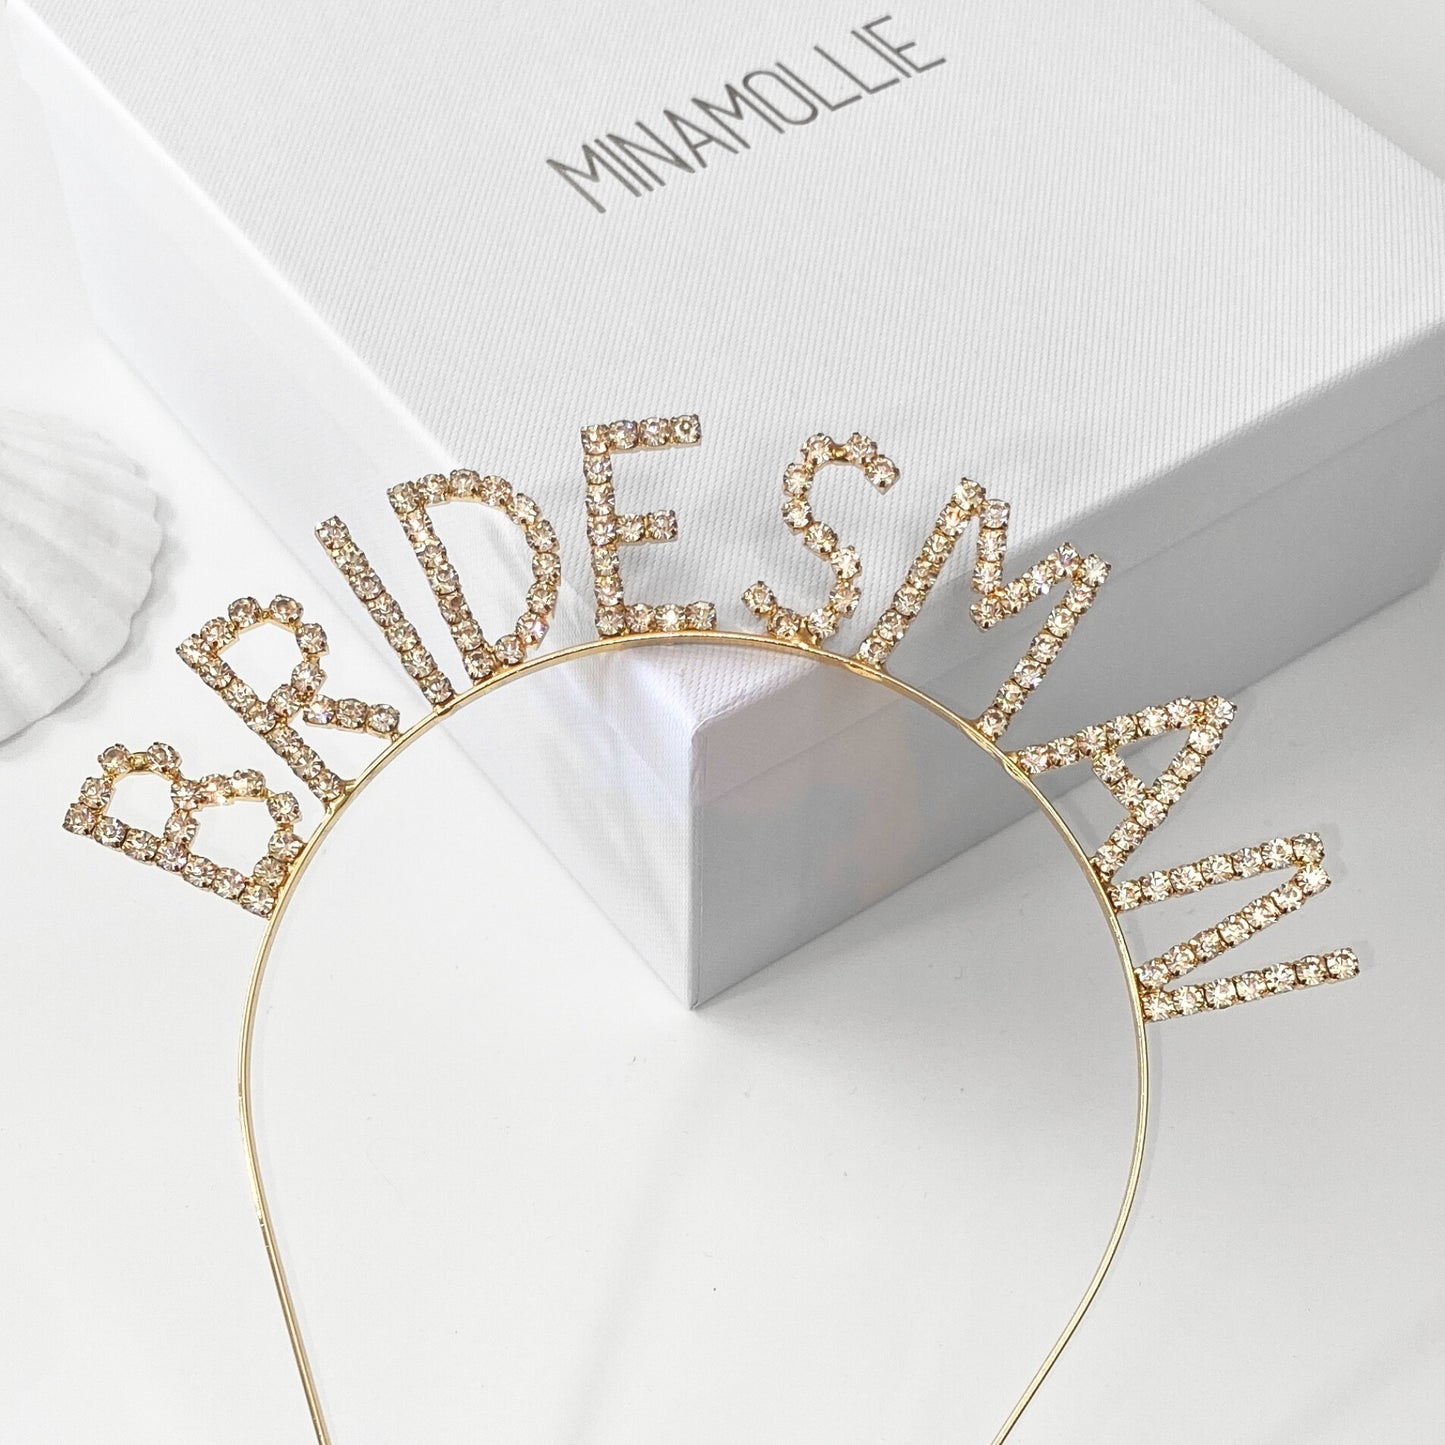 Bridesmaid Headband. diamante design in gold